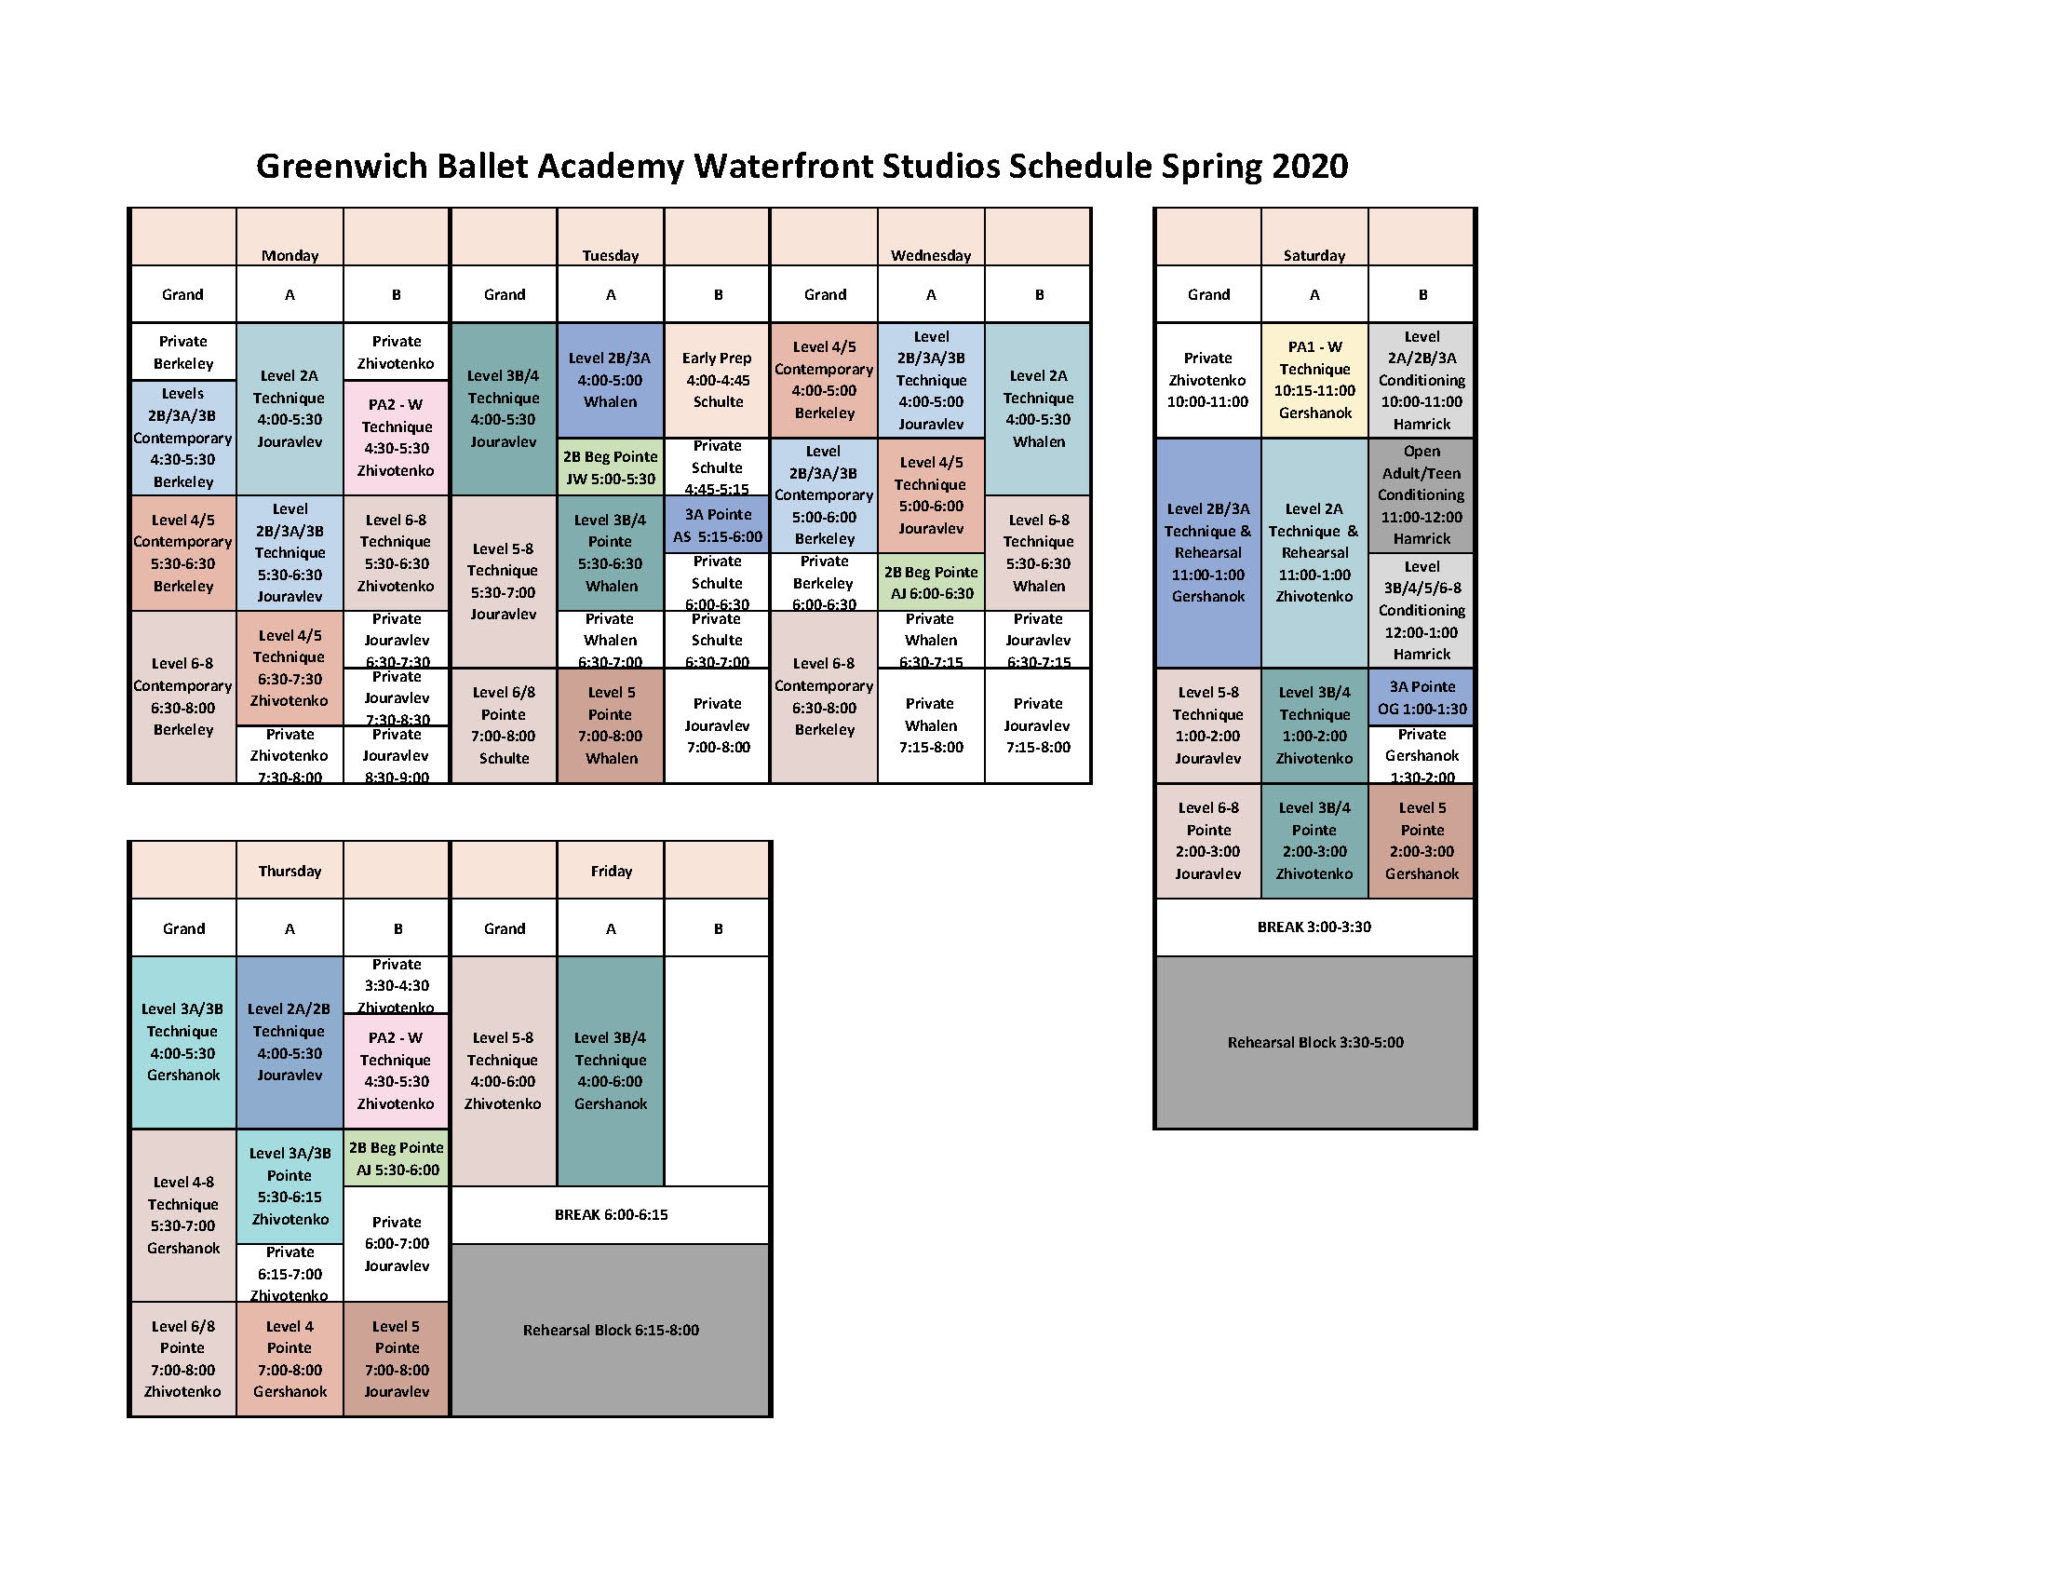 Stony brook calendar spring 2020 | CSE 320: Systems Fundamentals II